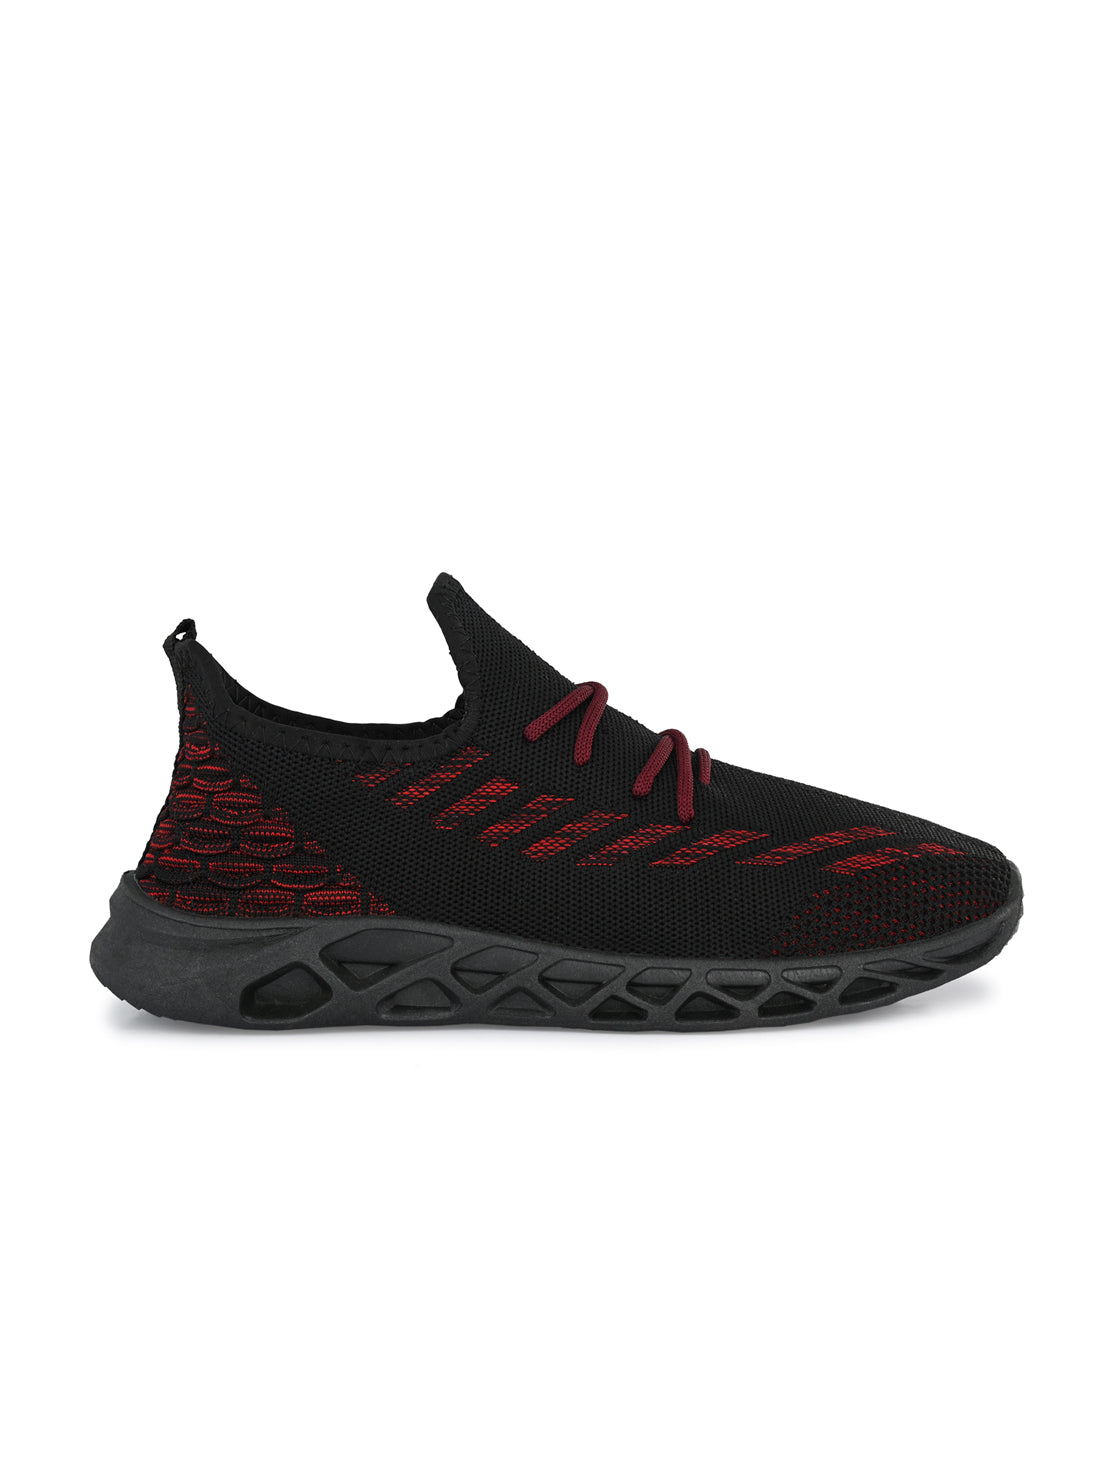 Hirolas® Men's Black Knitted Running/Walking/Gym Lace Up Sneaker Sport Shoes (HRL2051BLK)